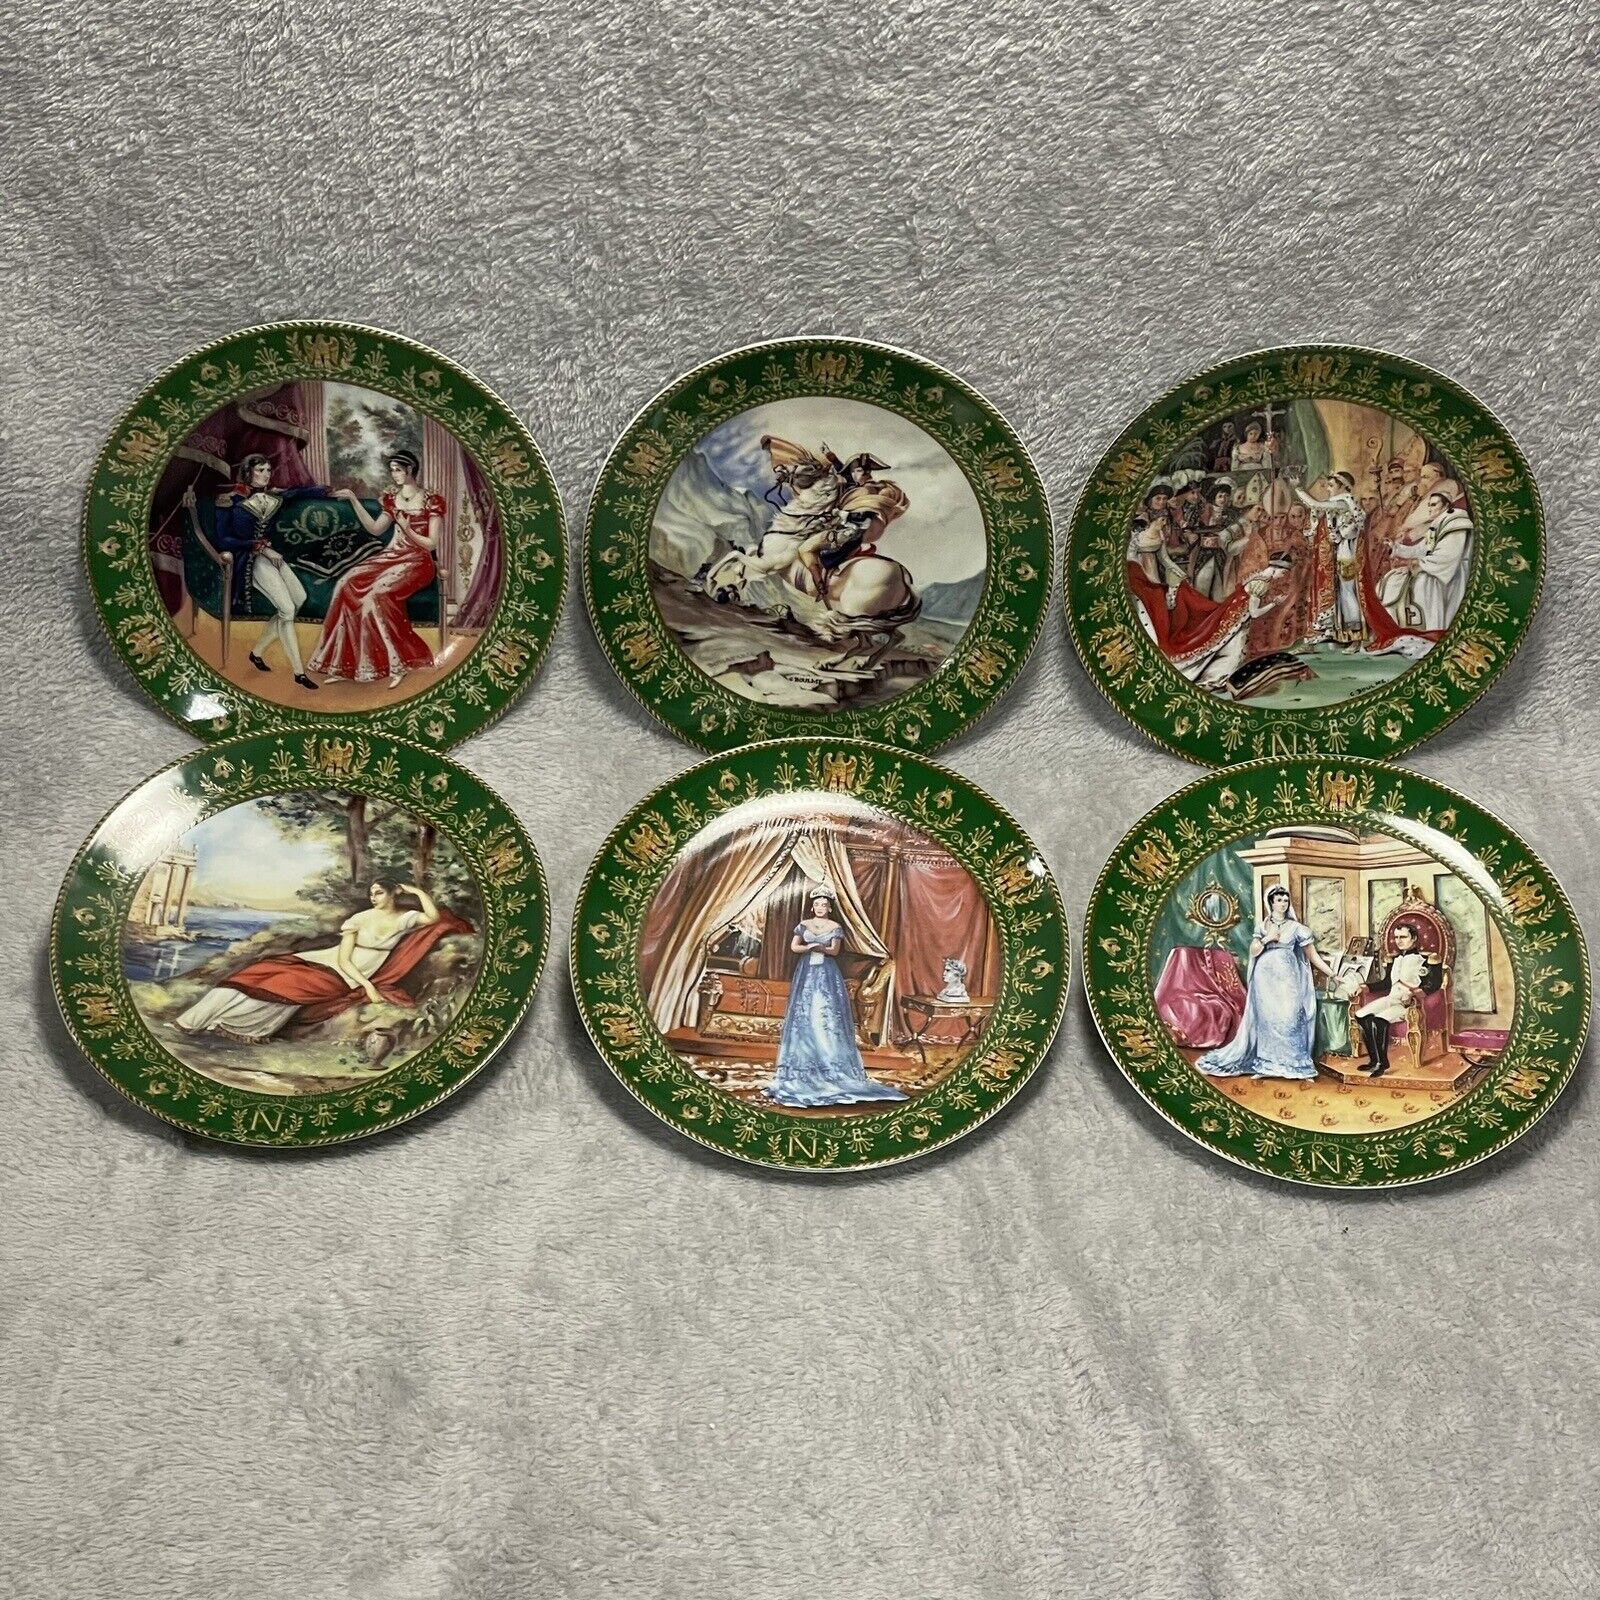 6 Limoges Collector Plates Josephine & Napoleon Bonaparte by Boulme 1984-86